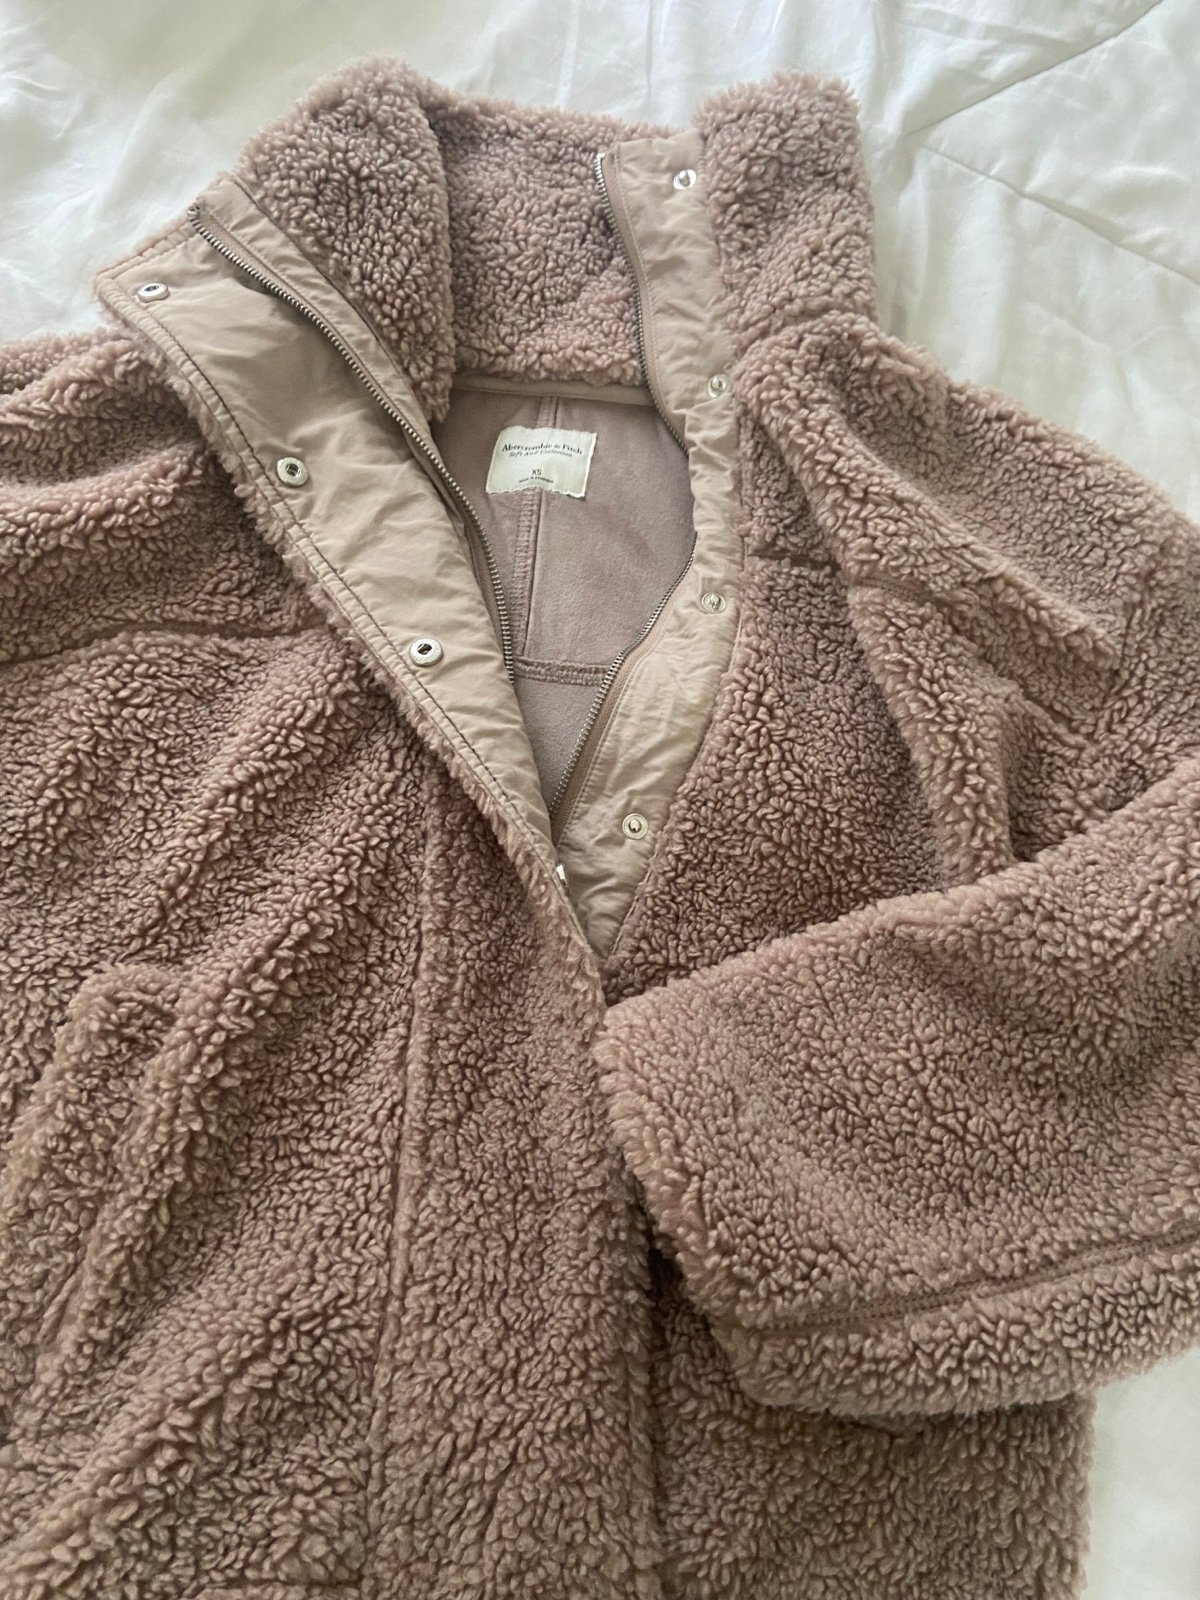 Comfortable Abercrombie Faux Fur oversized Jacket XS itZPItAP2 Fashion